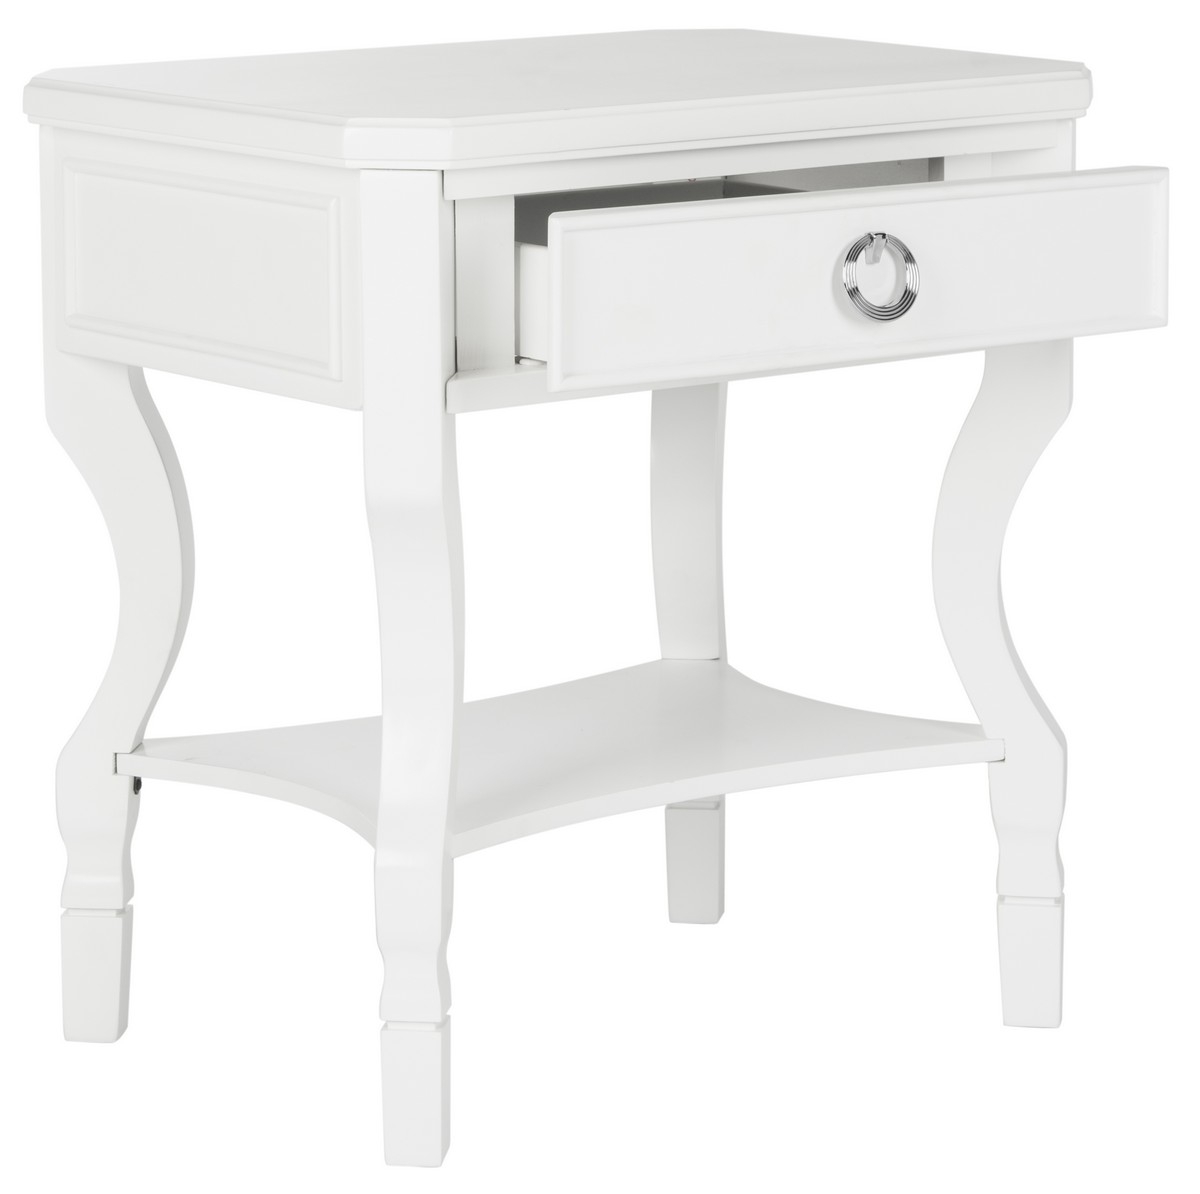 Alaia One Drawer Nightstand - White - Arlo Home - Image 1